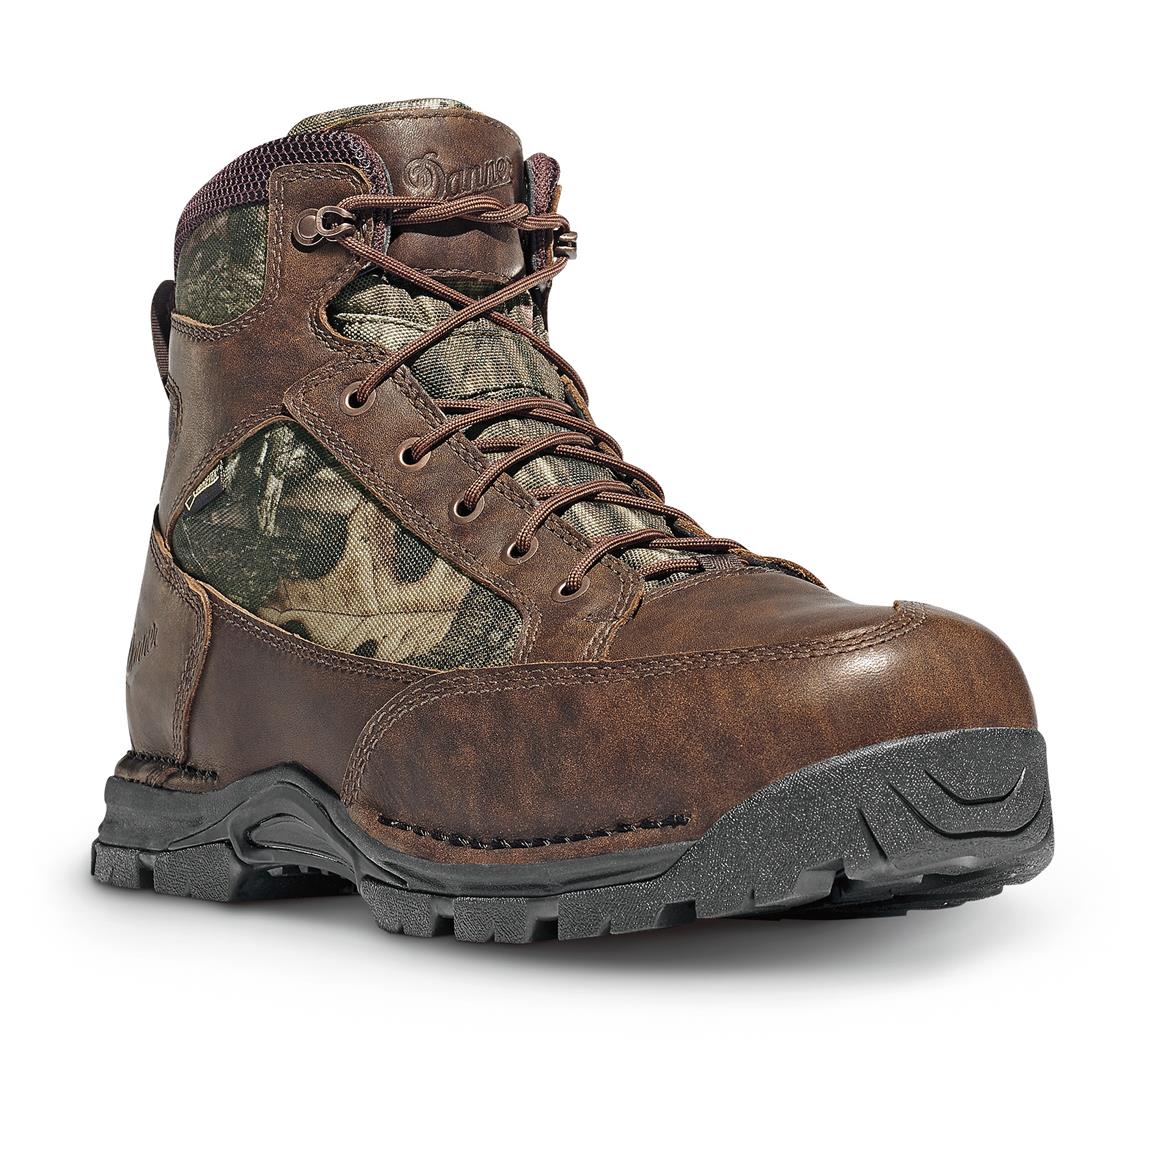 Danner Pronghorn Hunting Boots, Mossy Oak Break-Up Infinity - 653957 ...